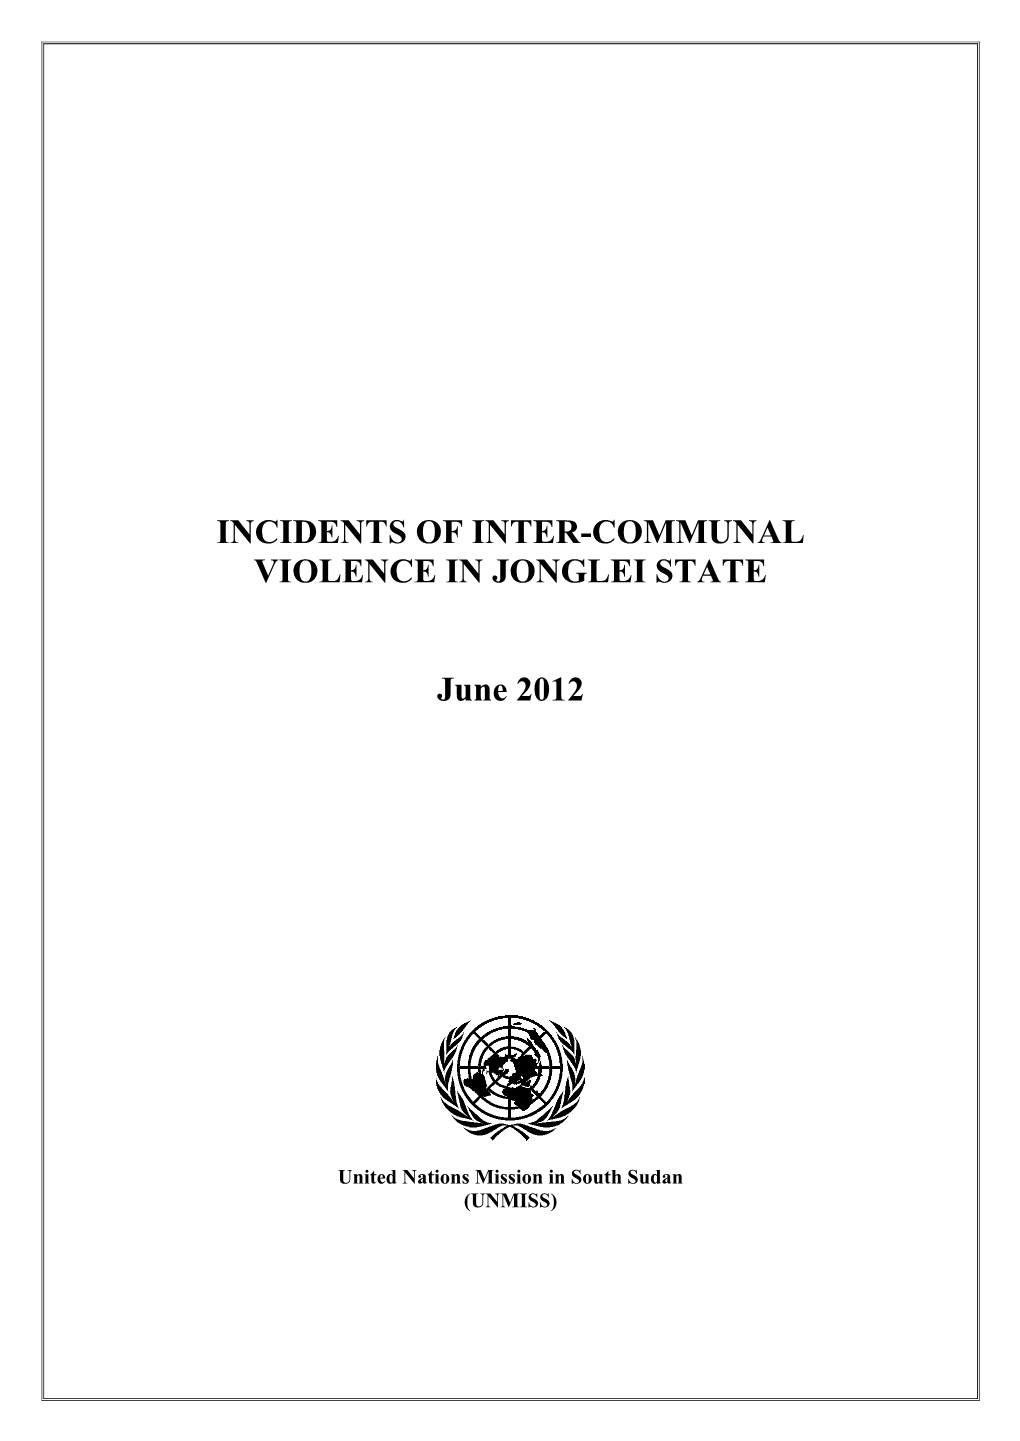 Inter-Communal Violence in Jonglei, June 2012